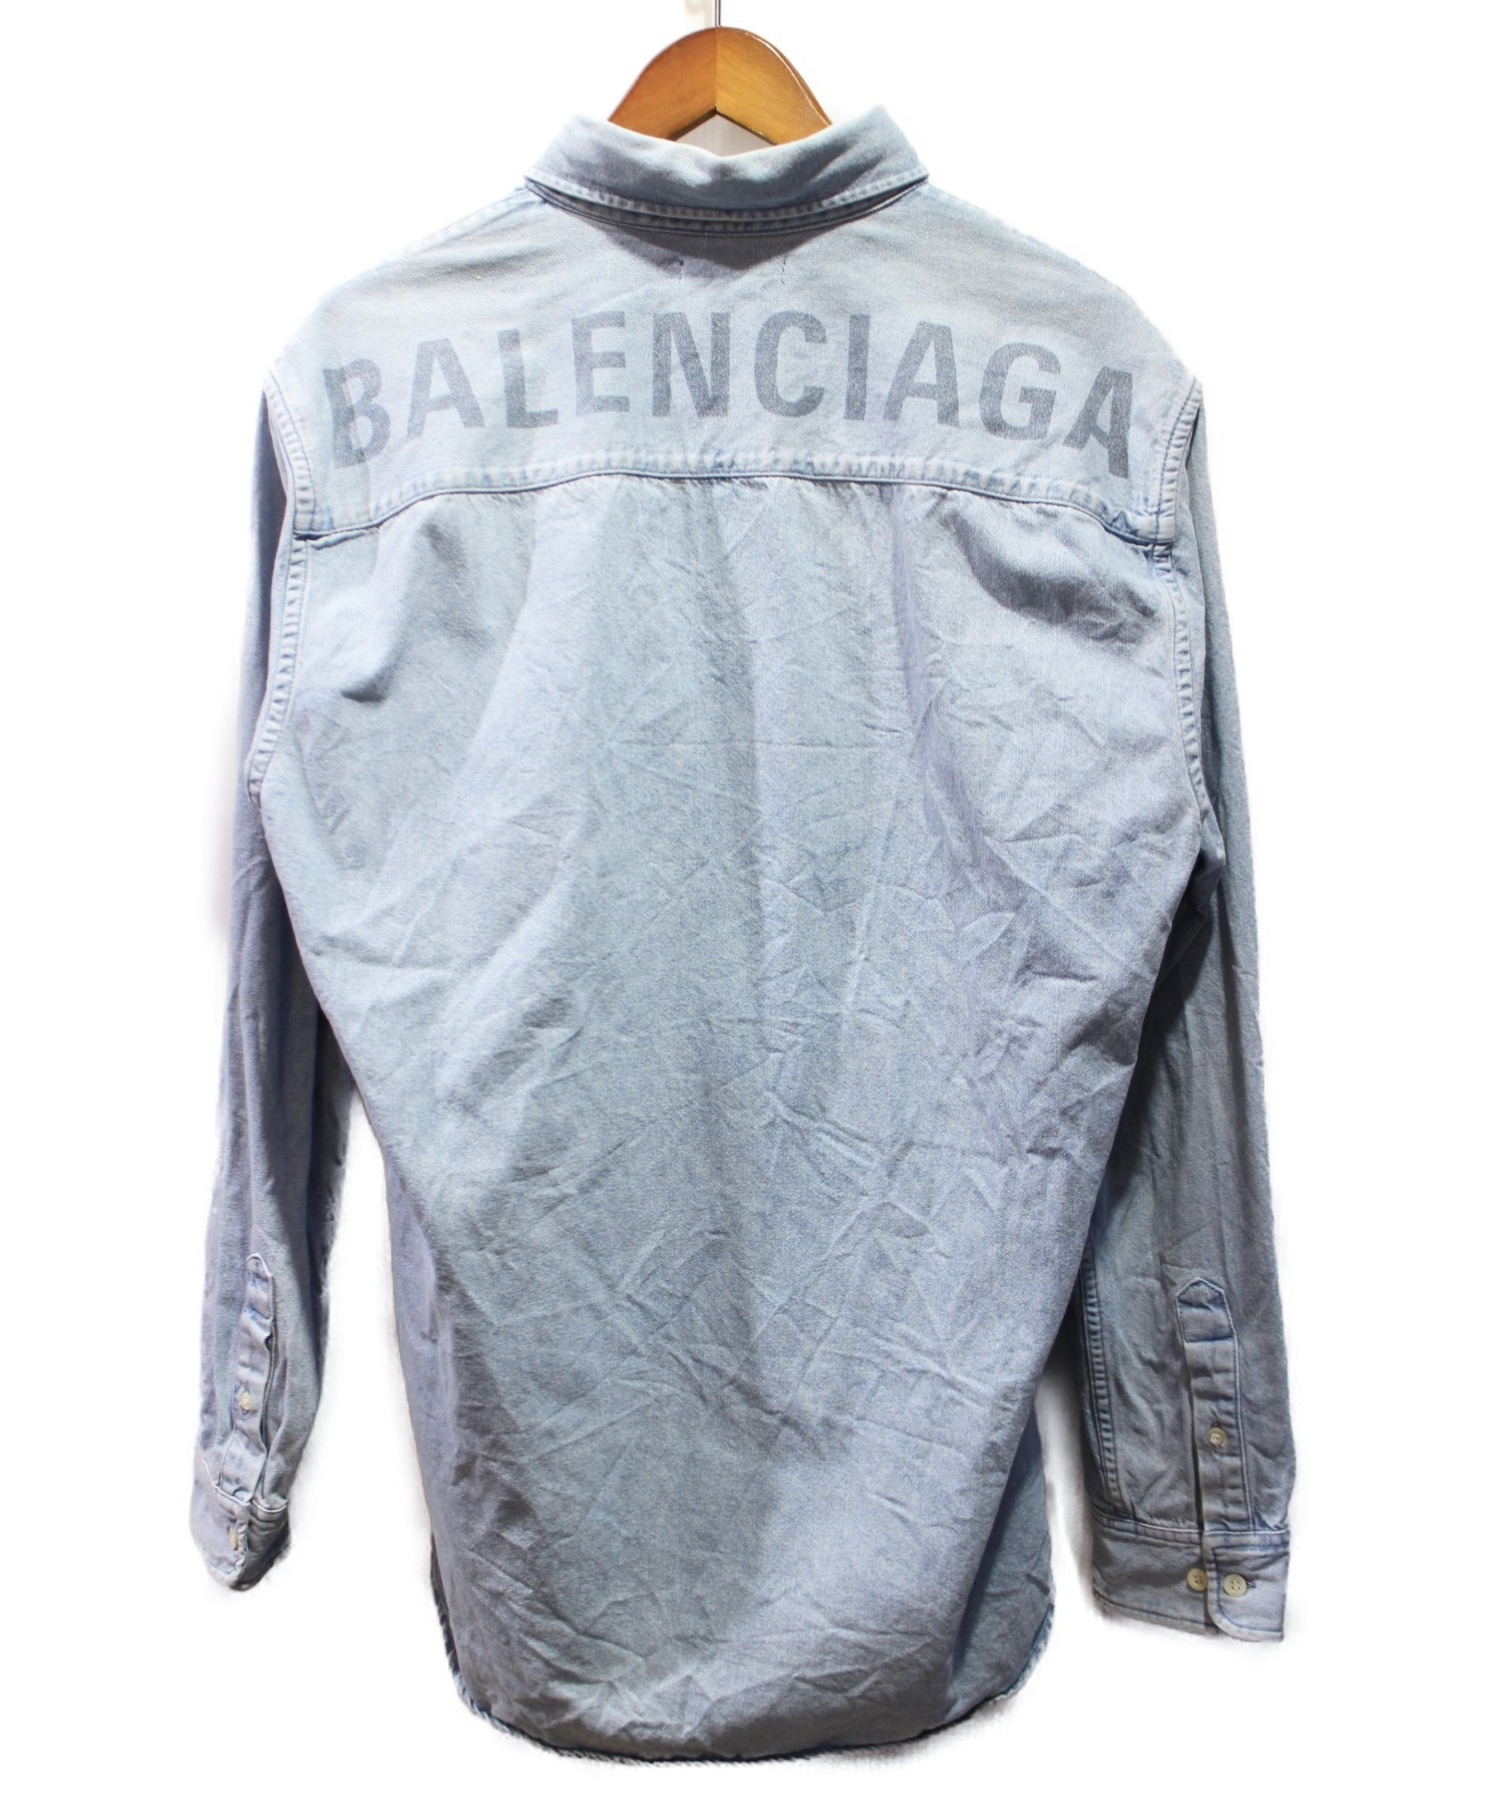 BALENCIAGA (バレンシアガ) 19SS バックロゴデニムシャツ サイズ:37